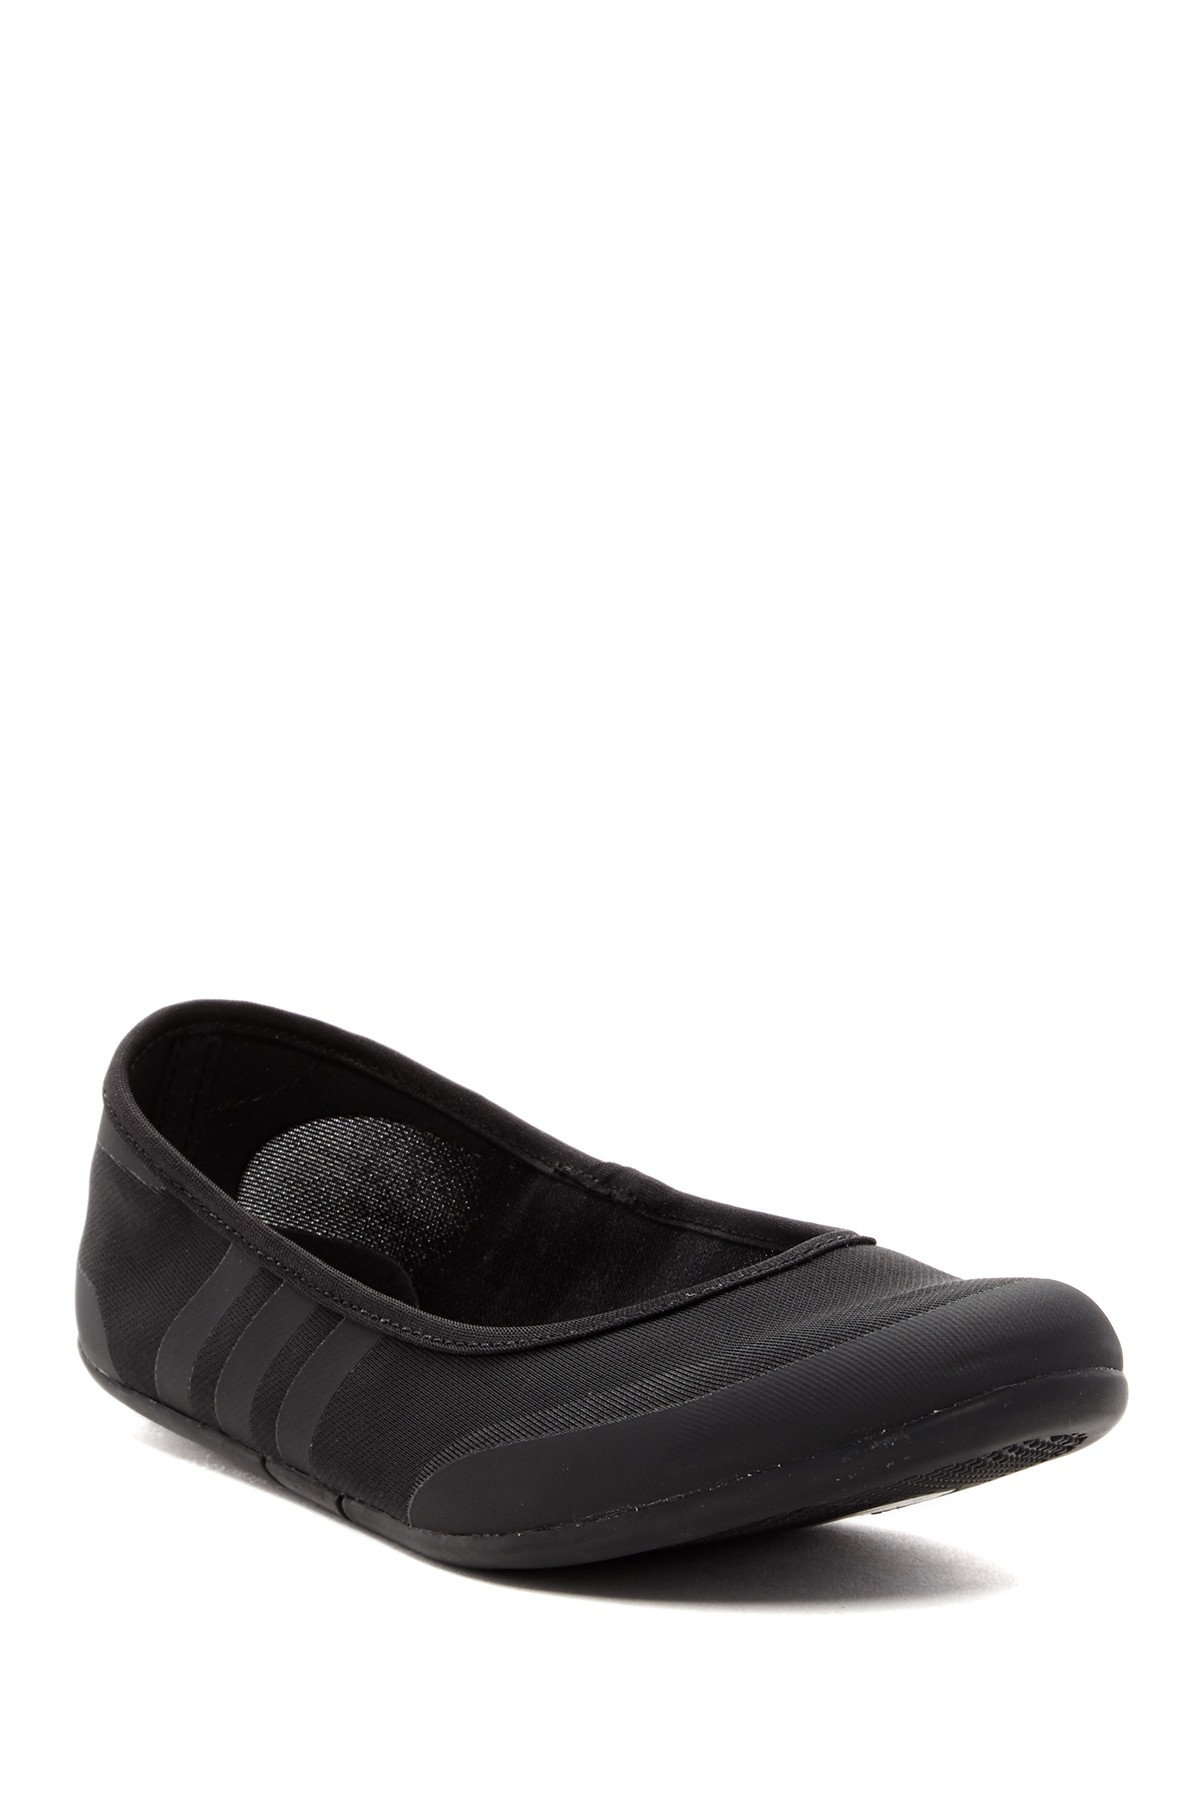 adidas Originals Sulina Ballet Flat in Black | Lyst